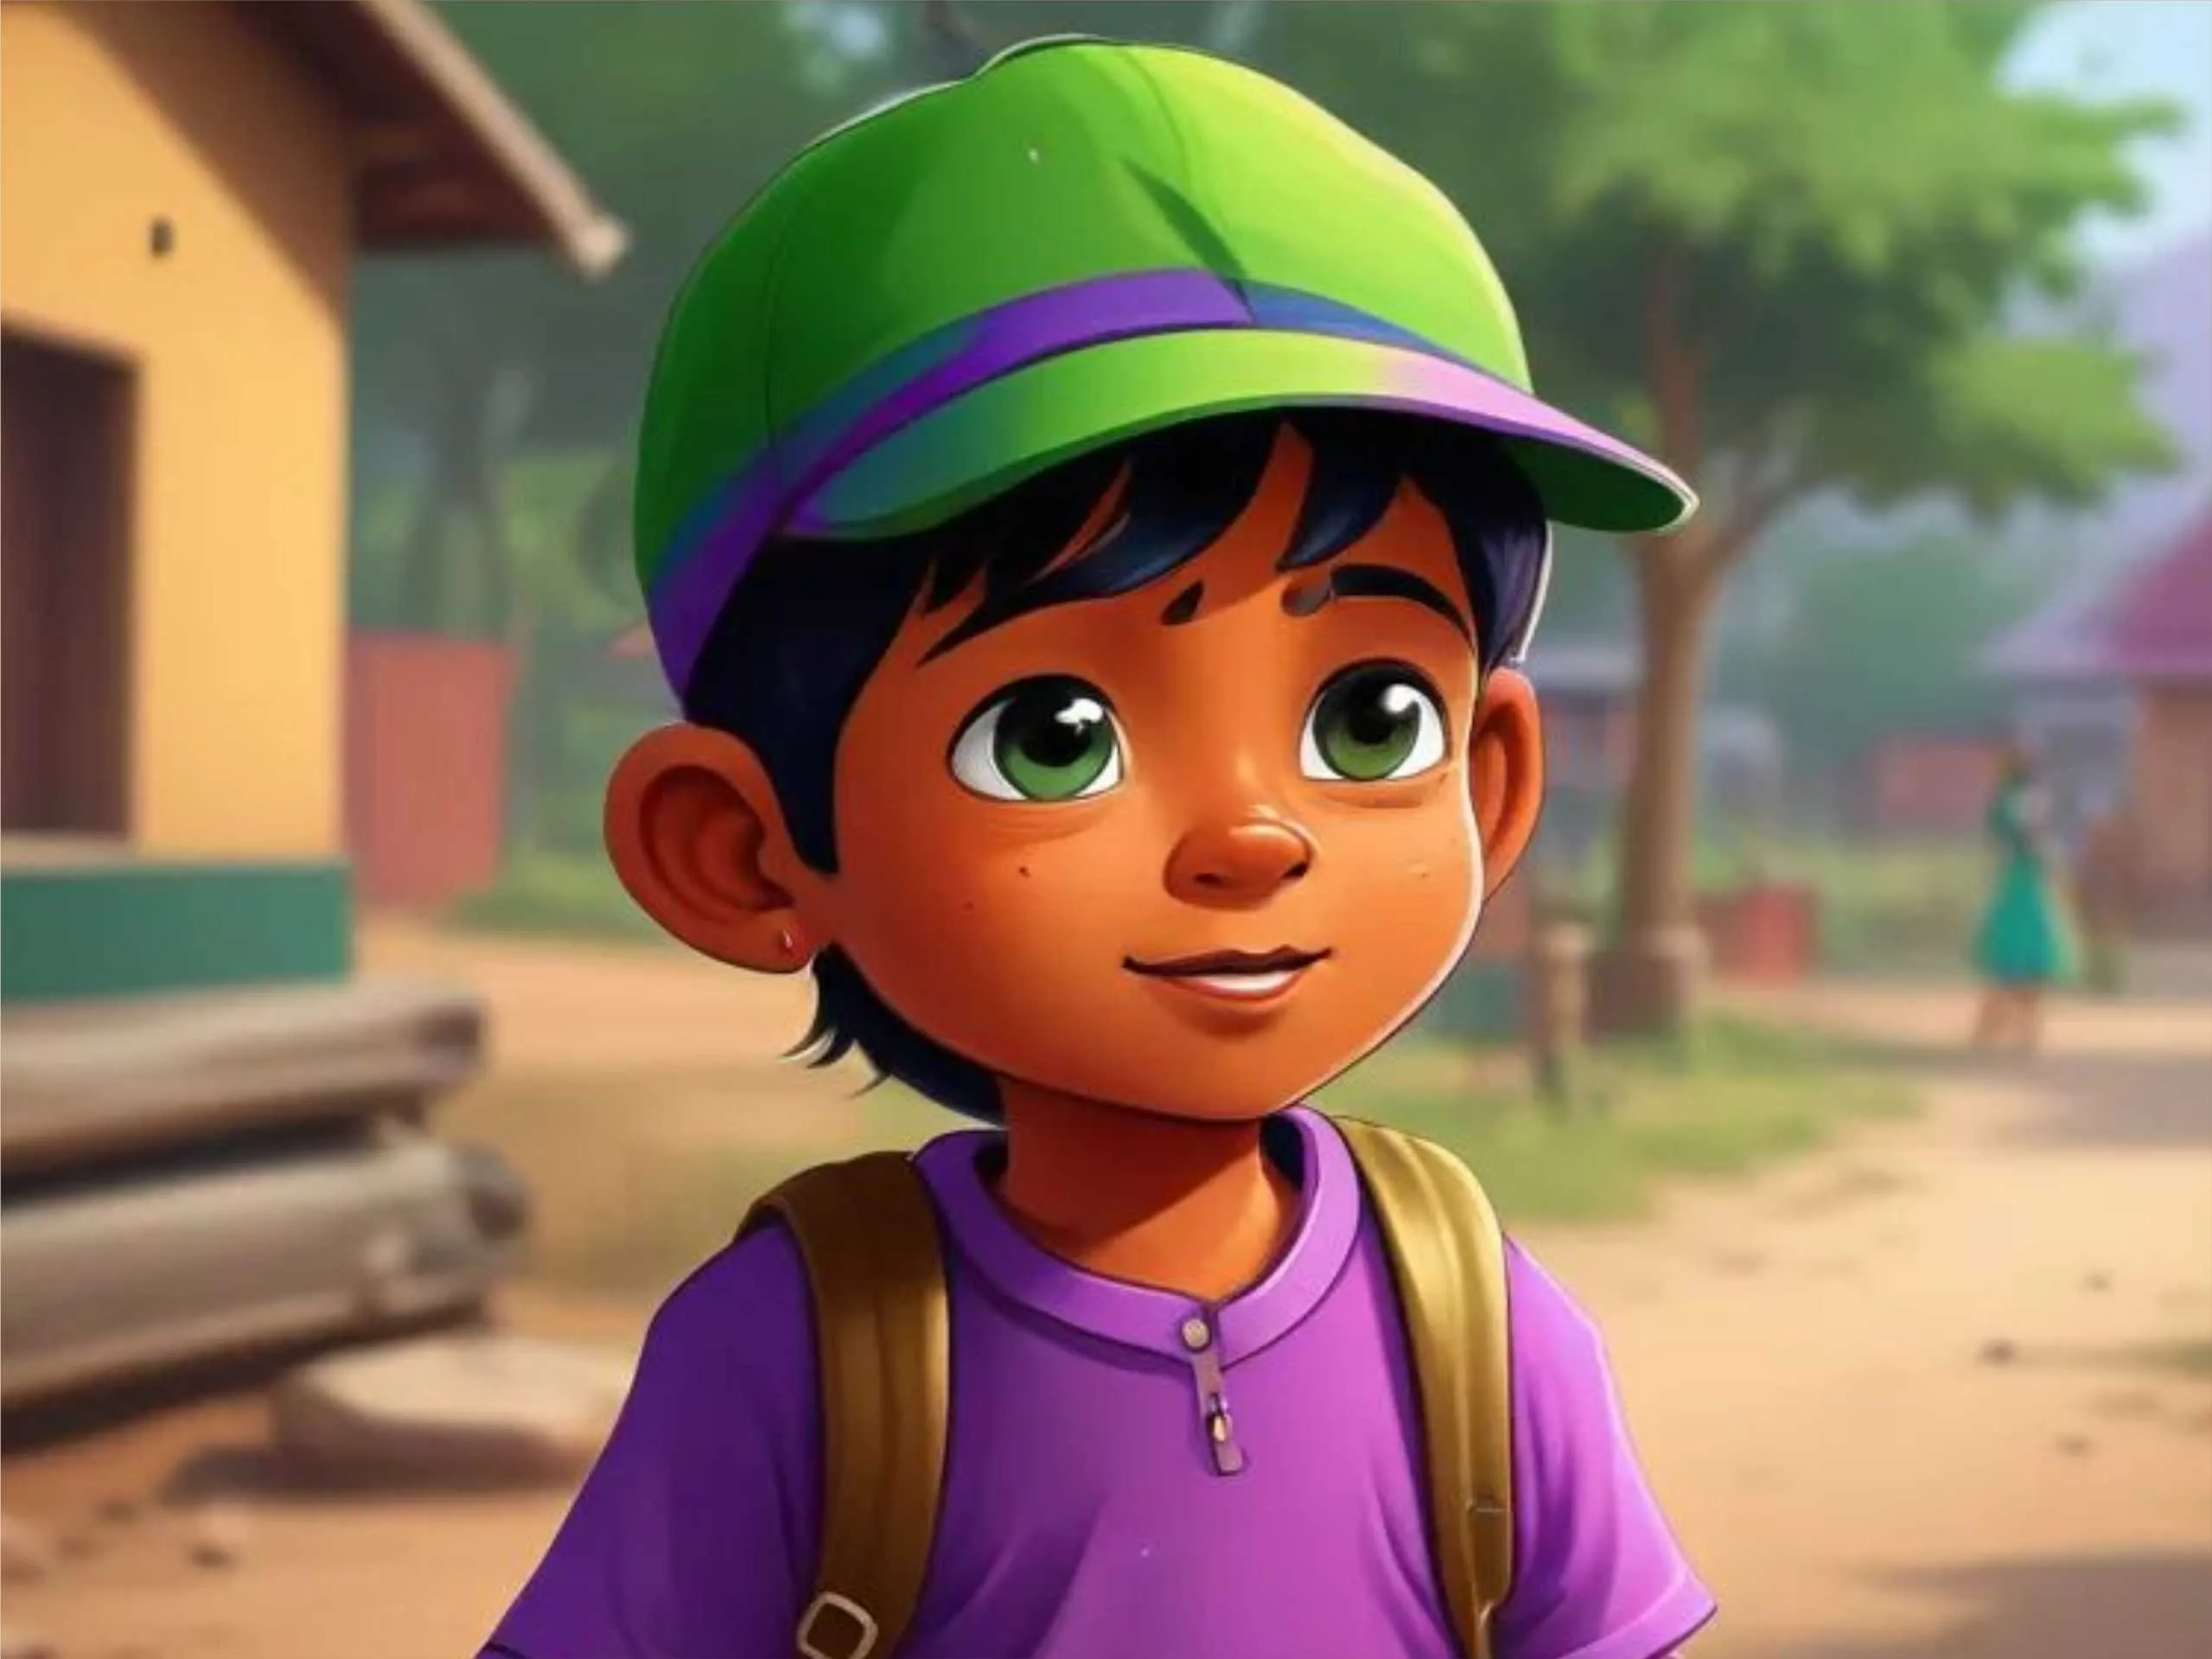 cartoon image of an Indian village boy